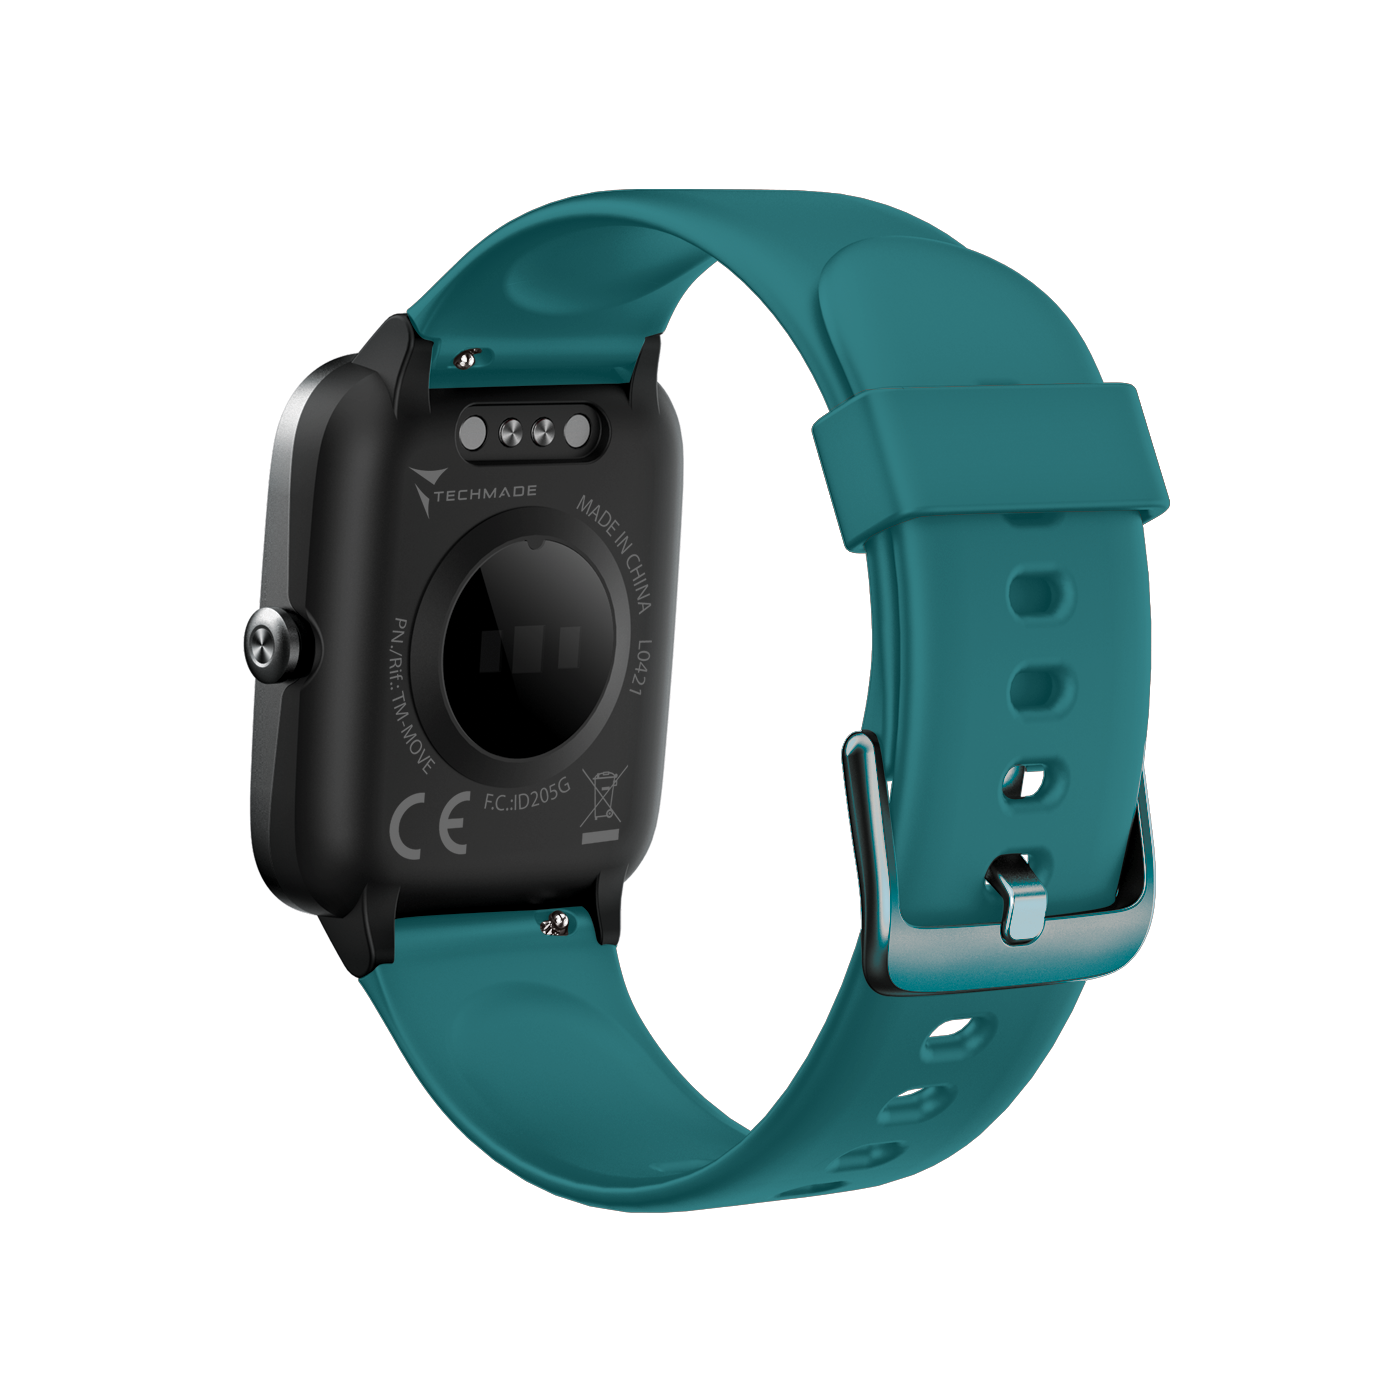 Techmade smartwatch MOVE GPS integrato green TM-MOVE-GR